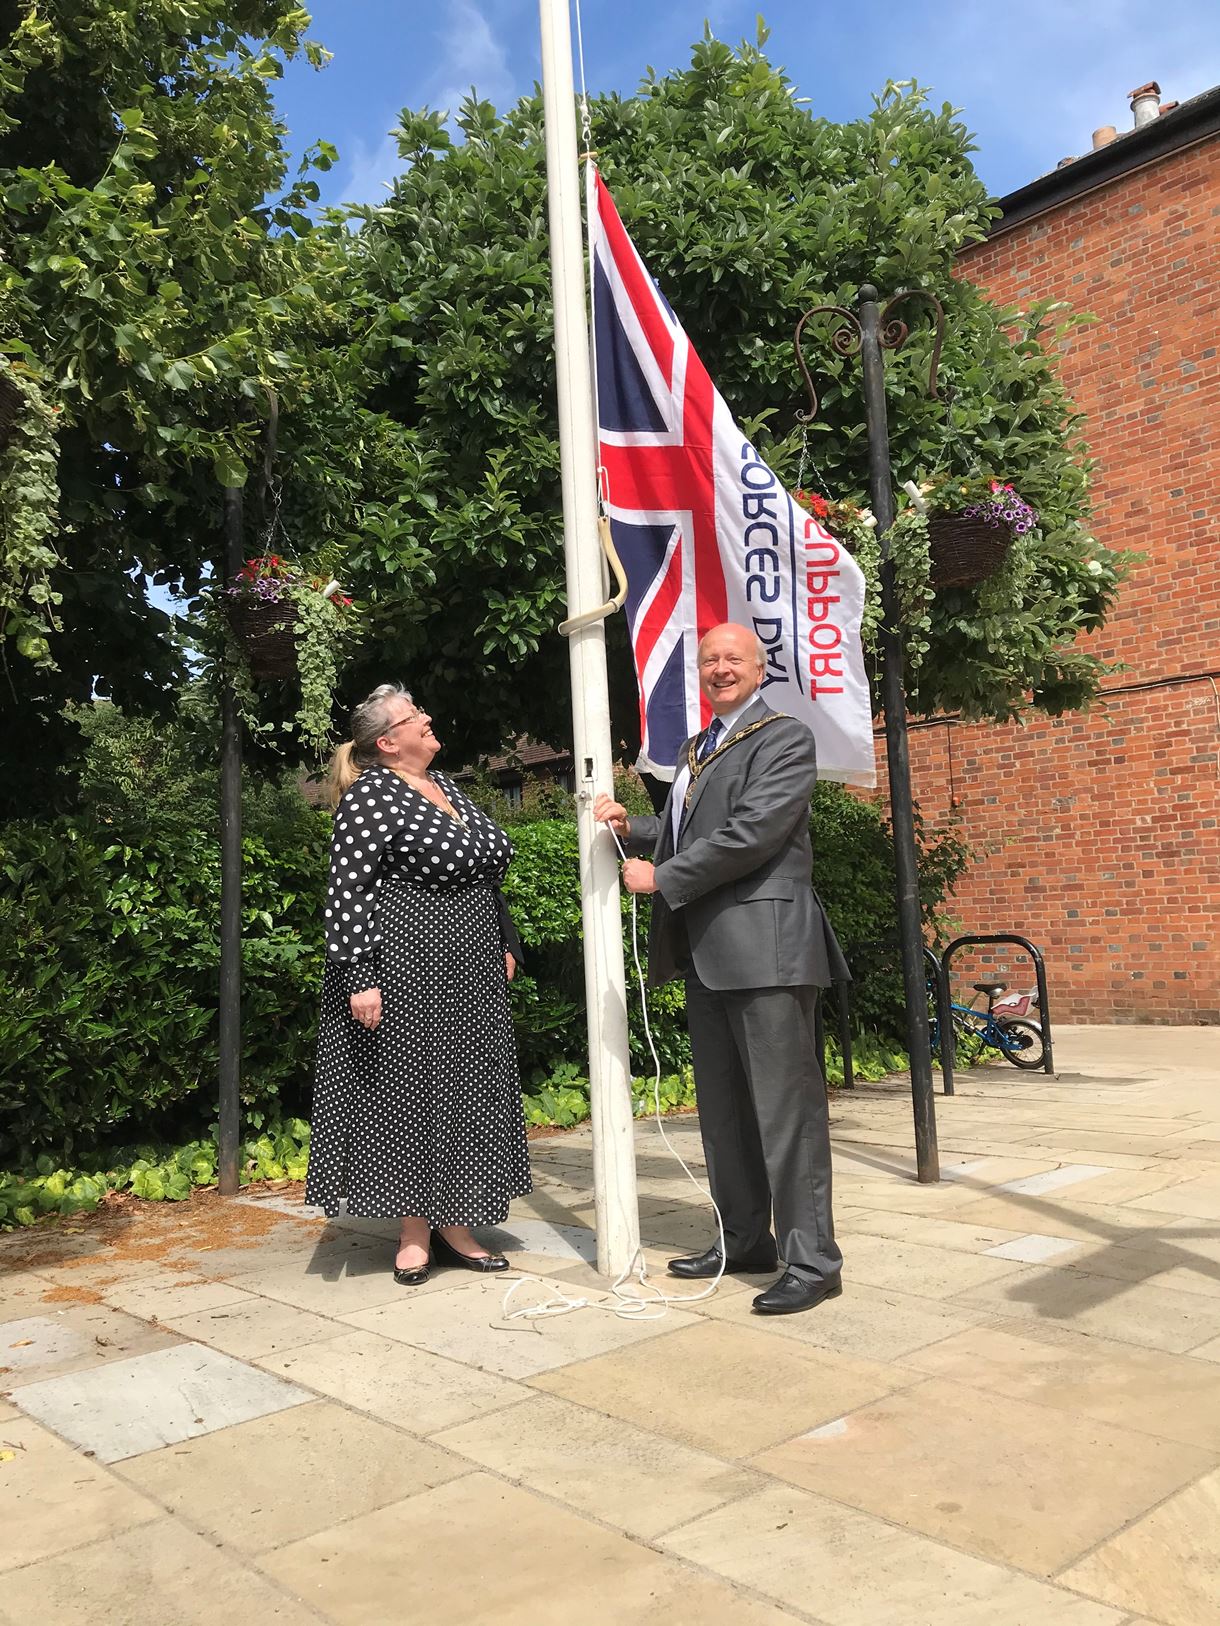 Mayor councillor Hatley raises the flag in Romsey